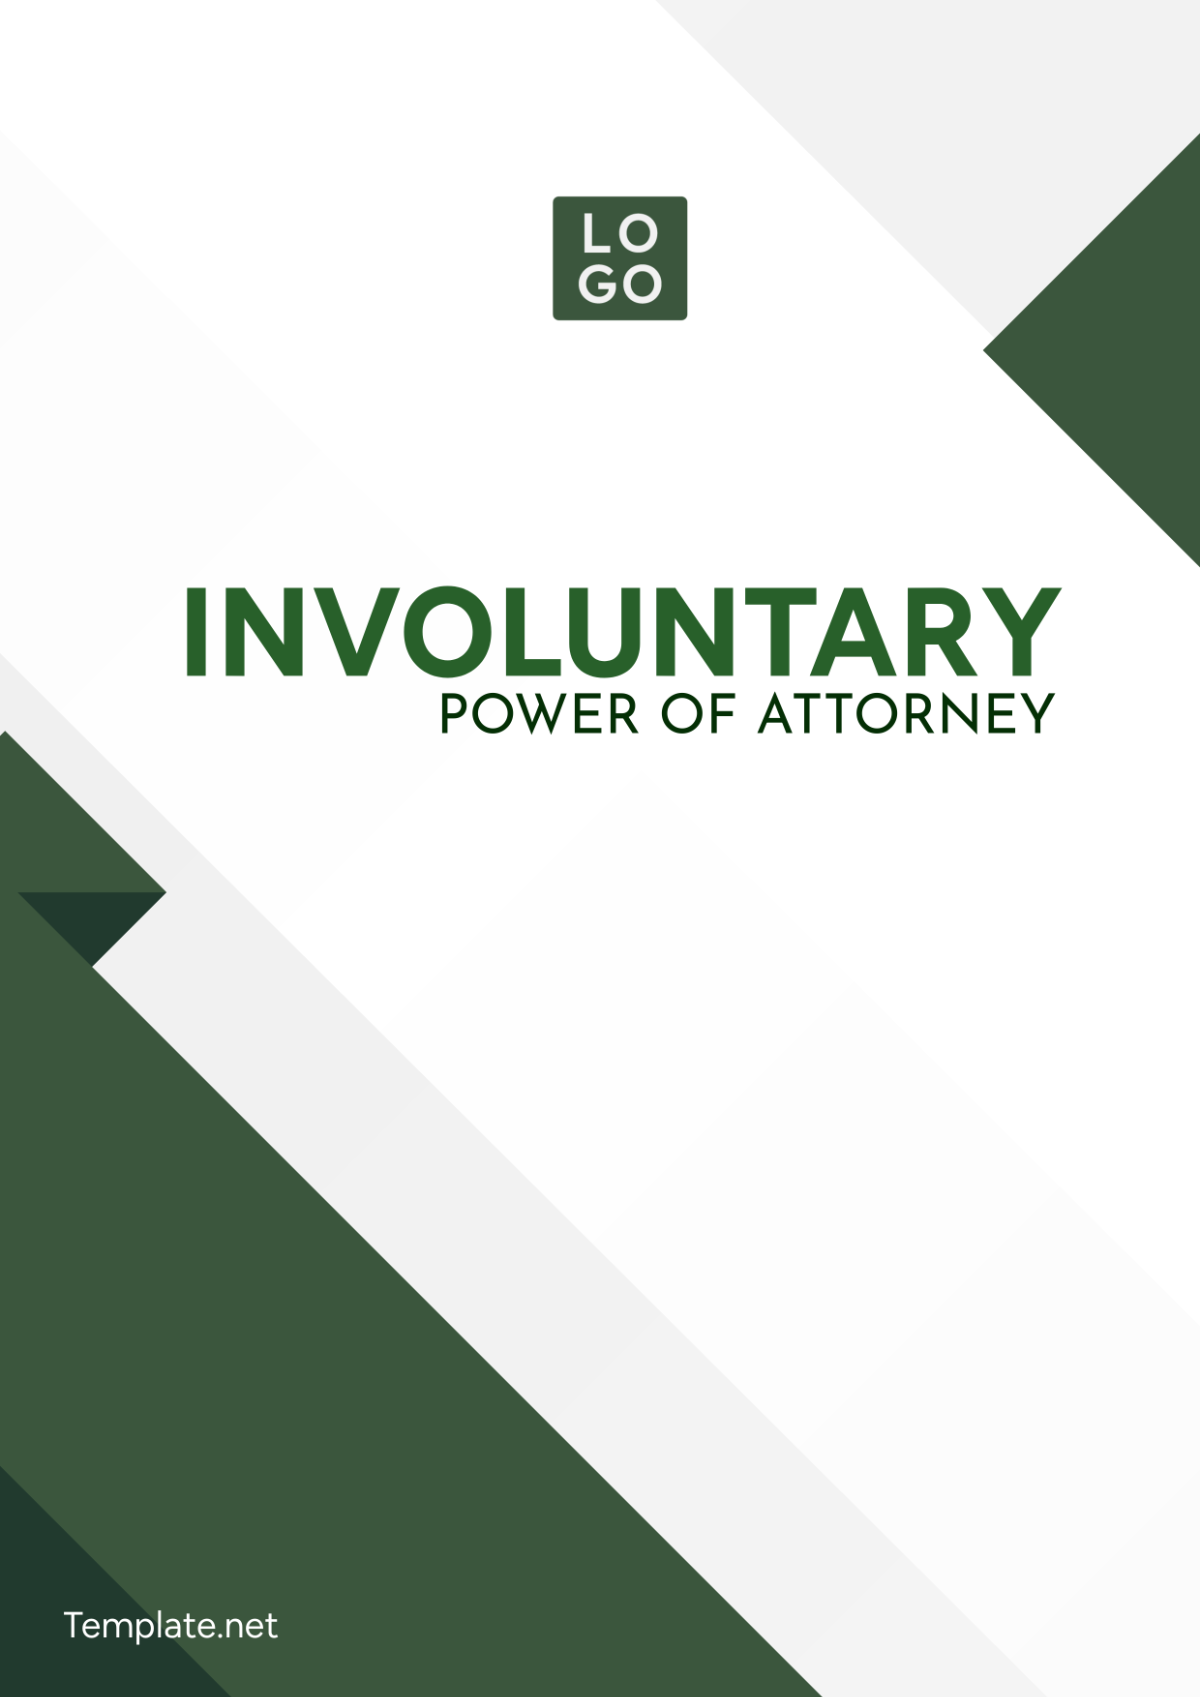 Involuntary Power of Attorney Template